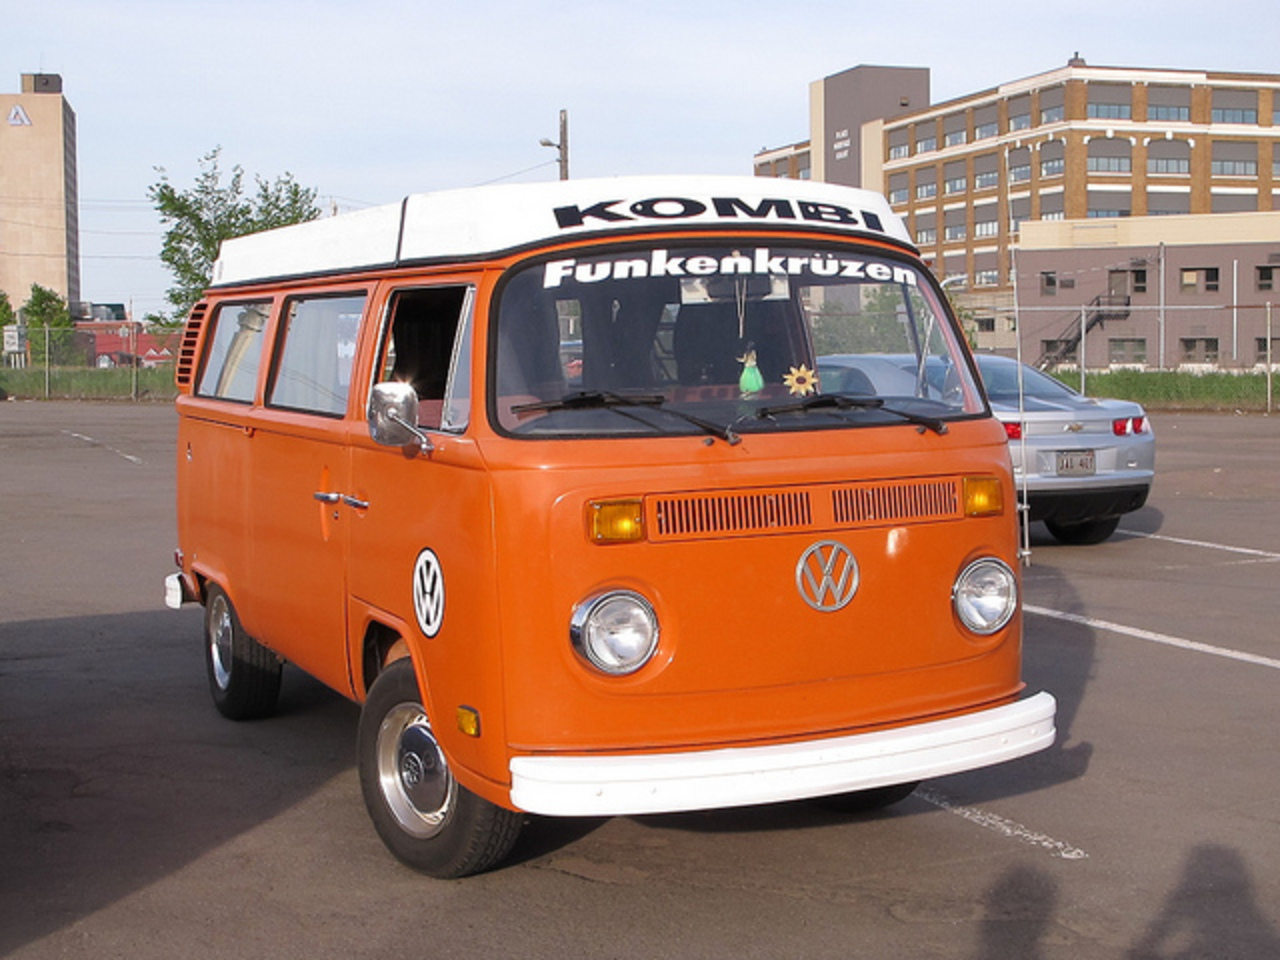 1975 Volkswagen Westfalia camper | Flickr - Photo Sharing!